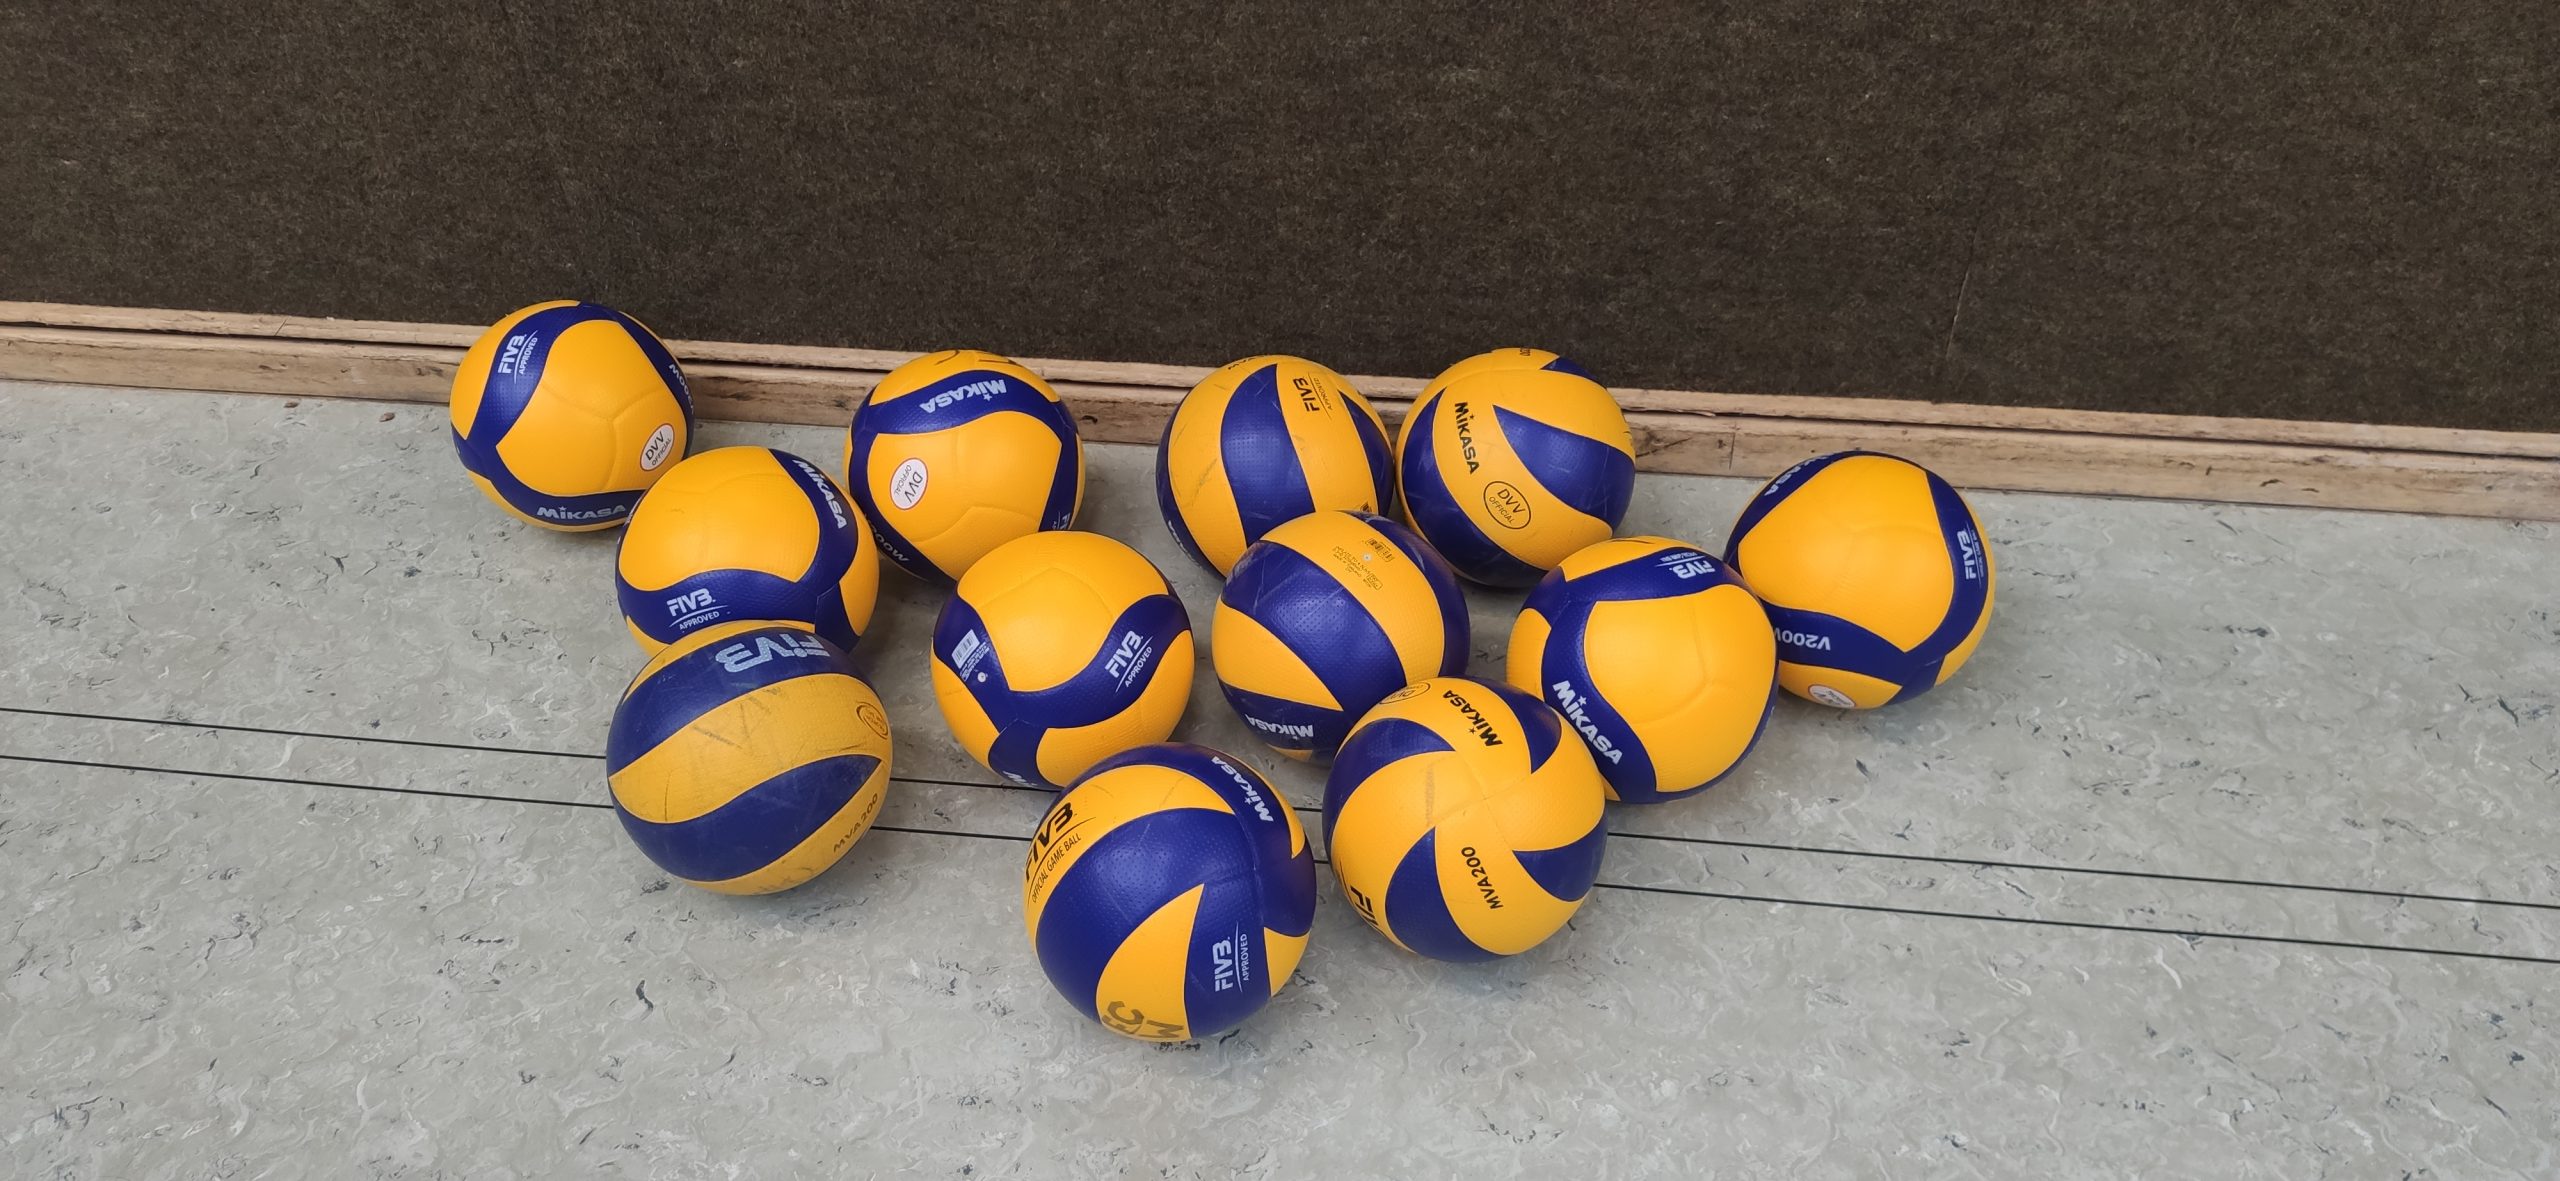 Read more about the article 12 (neue) Bälle für die Volleyball Abteilung